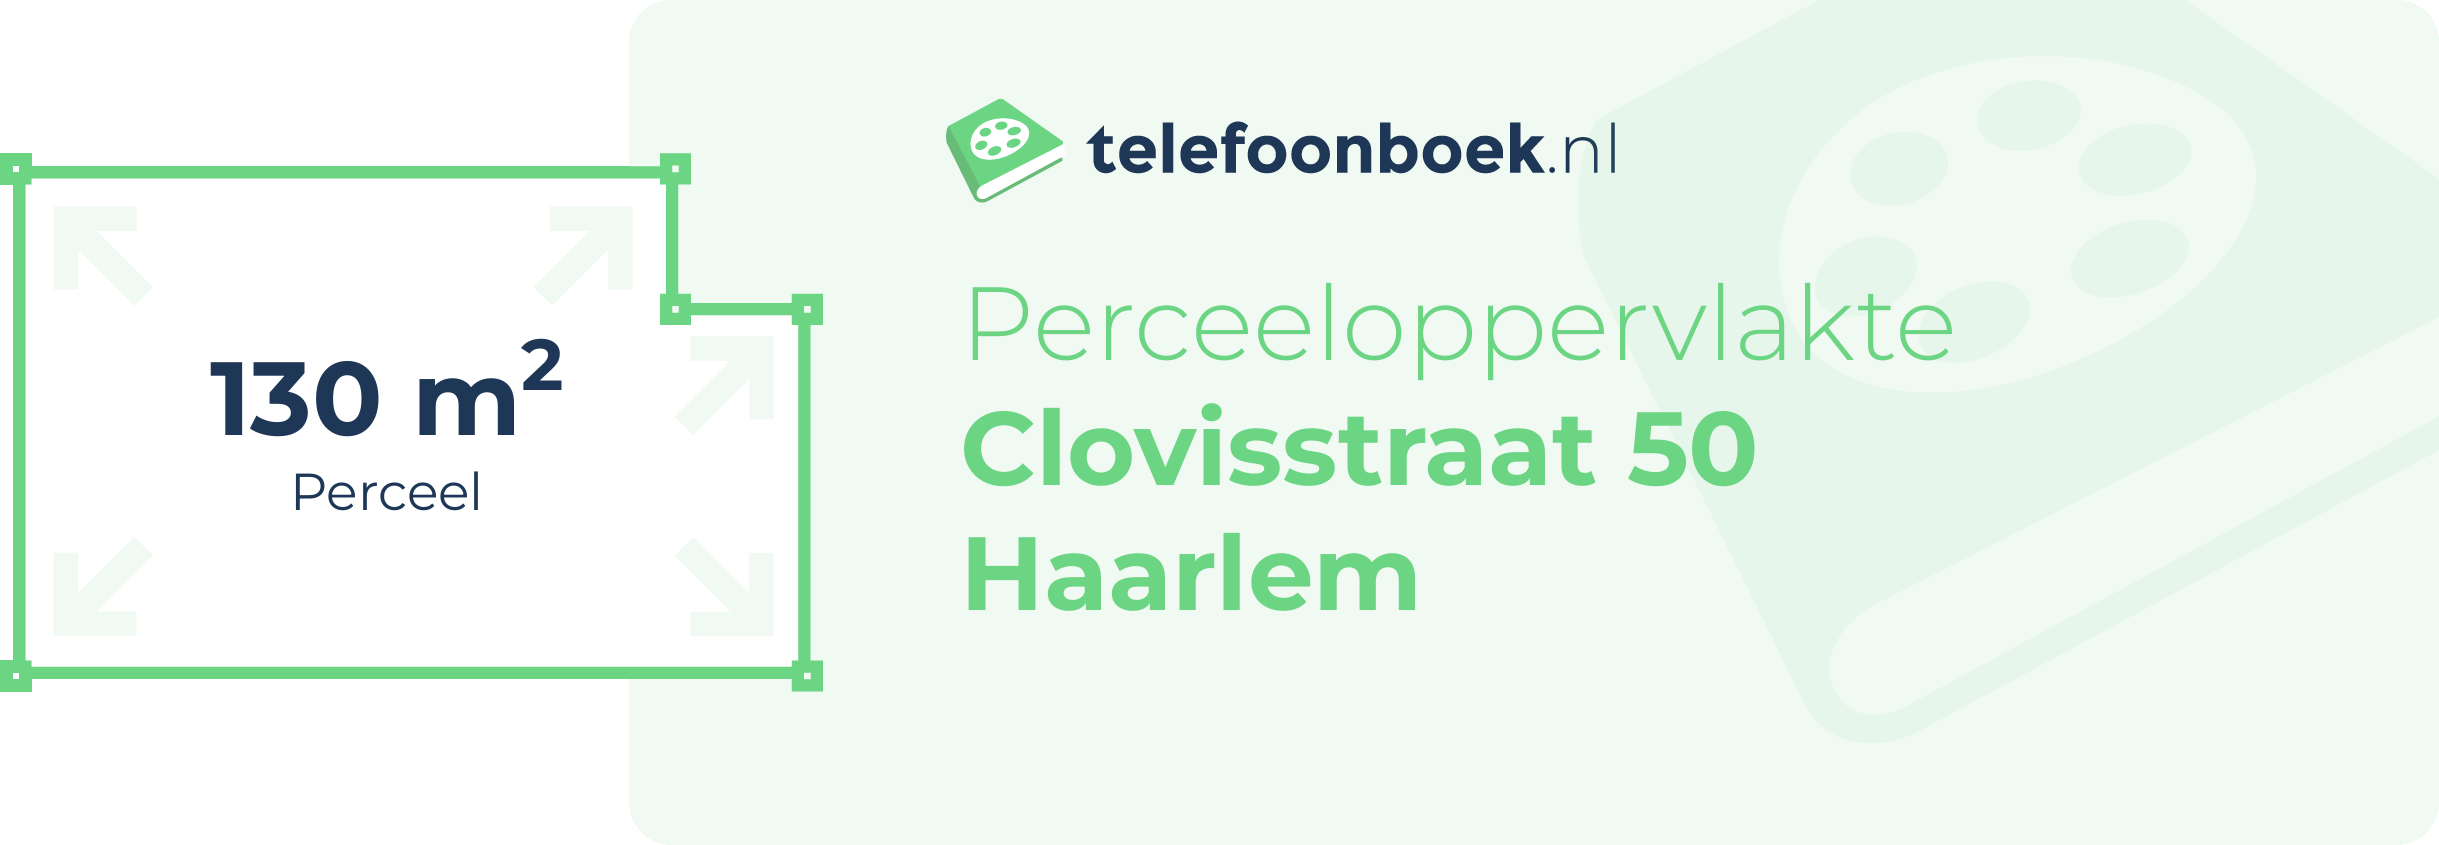 Perceeloppervlakte Clovisstraat 50 Haarlem